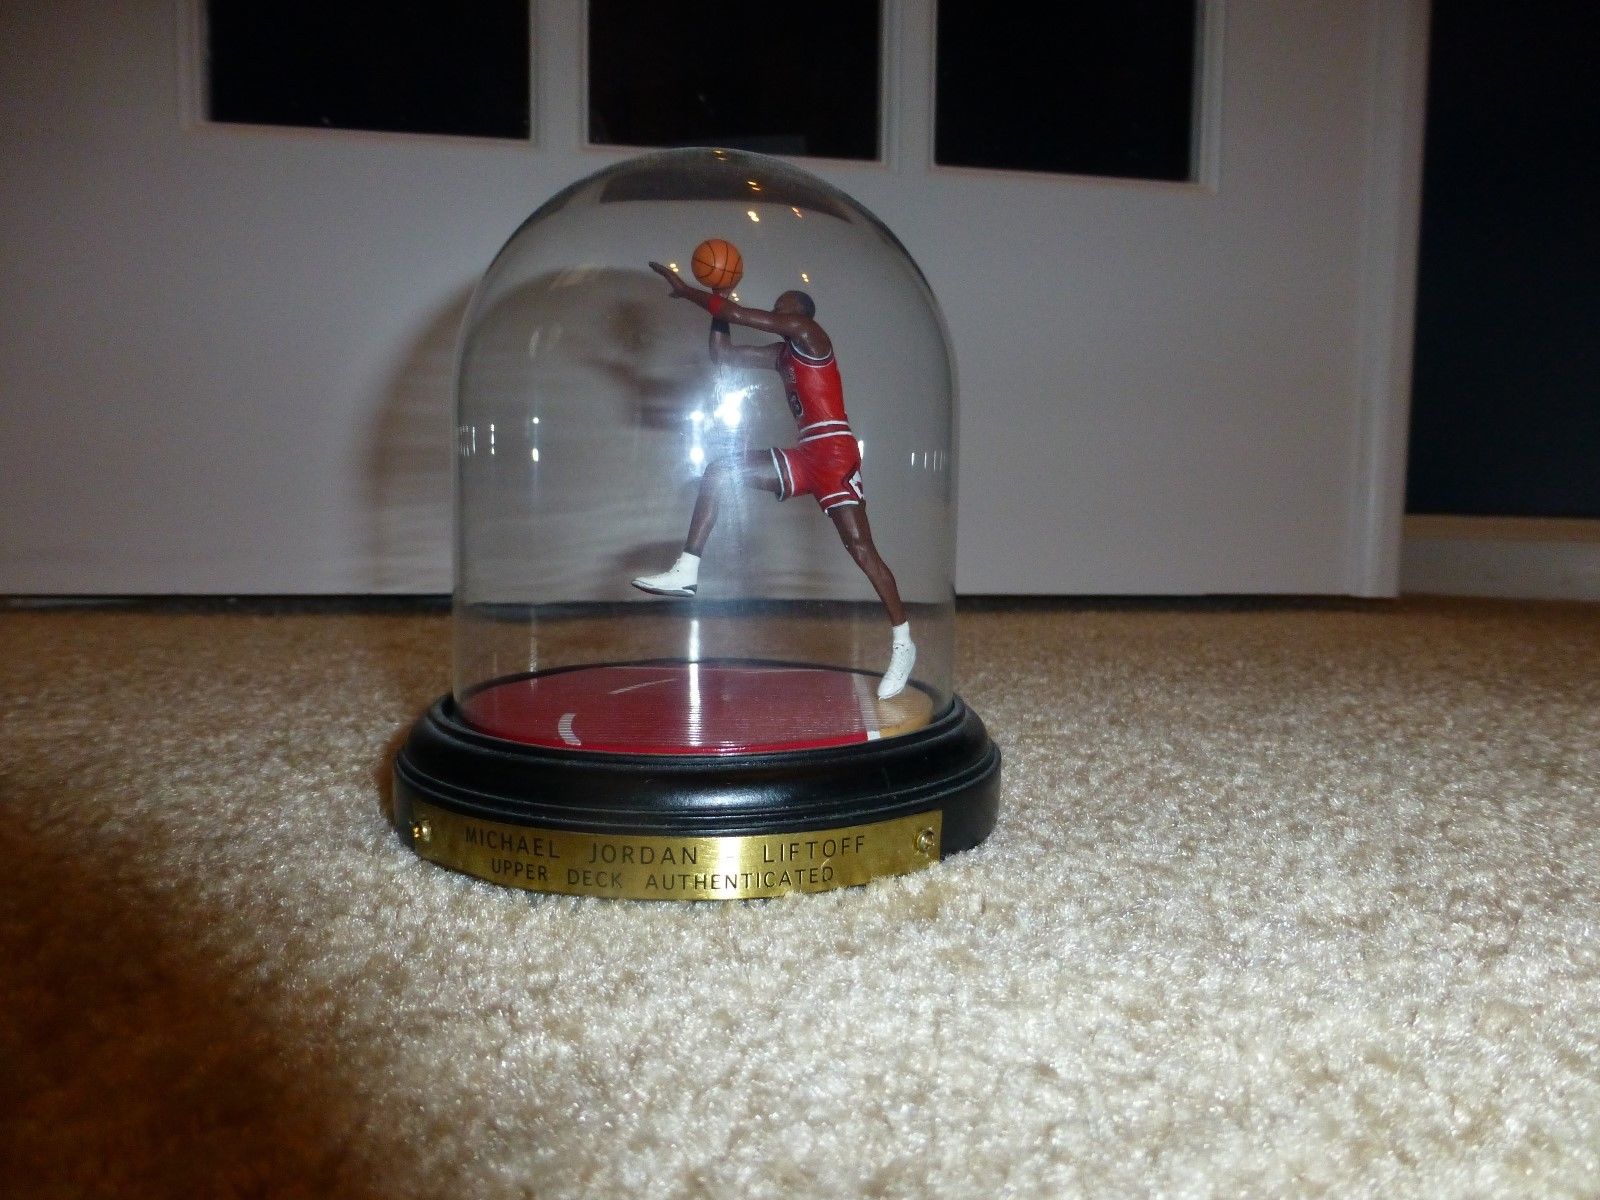 Michael Jordan Figurine